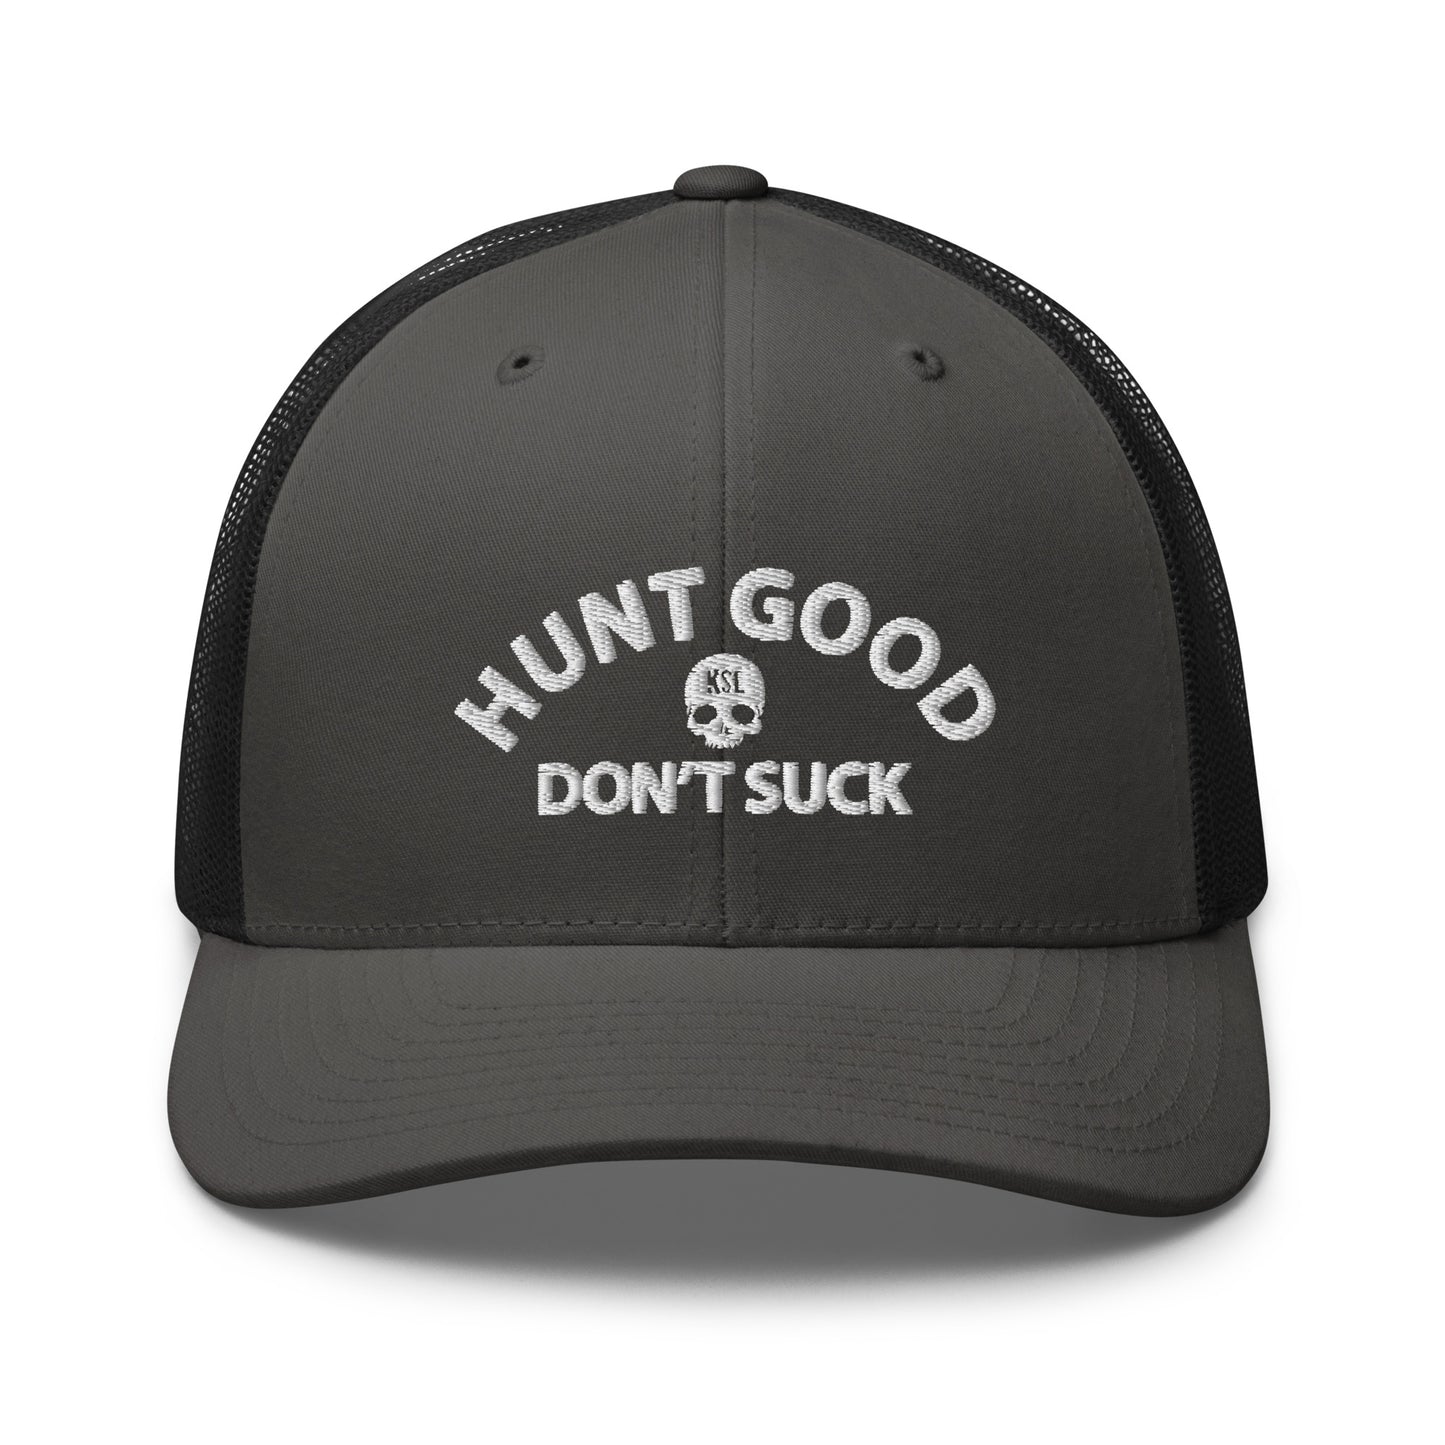 Hunt Good, Don't Suck Trucker Cap - White Thread